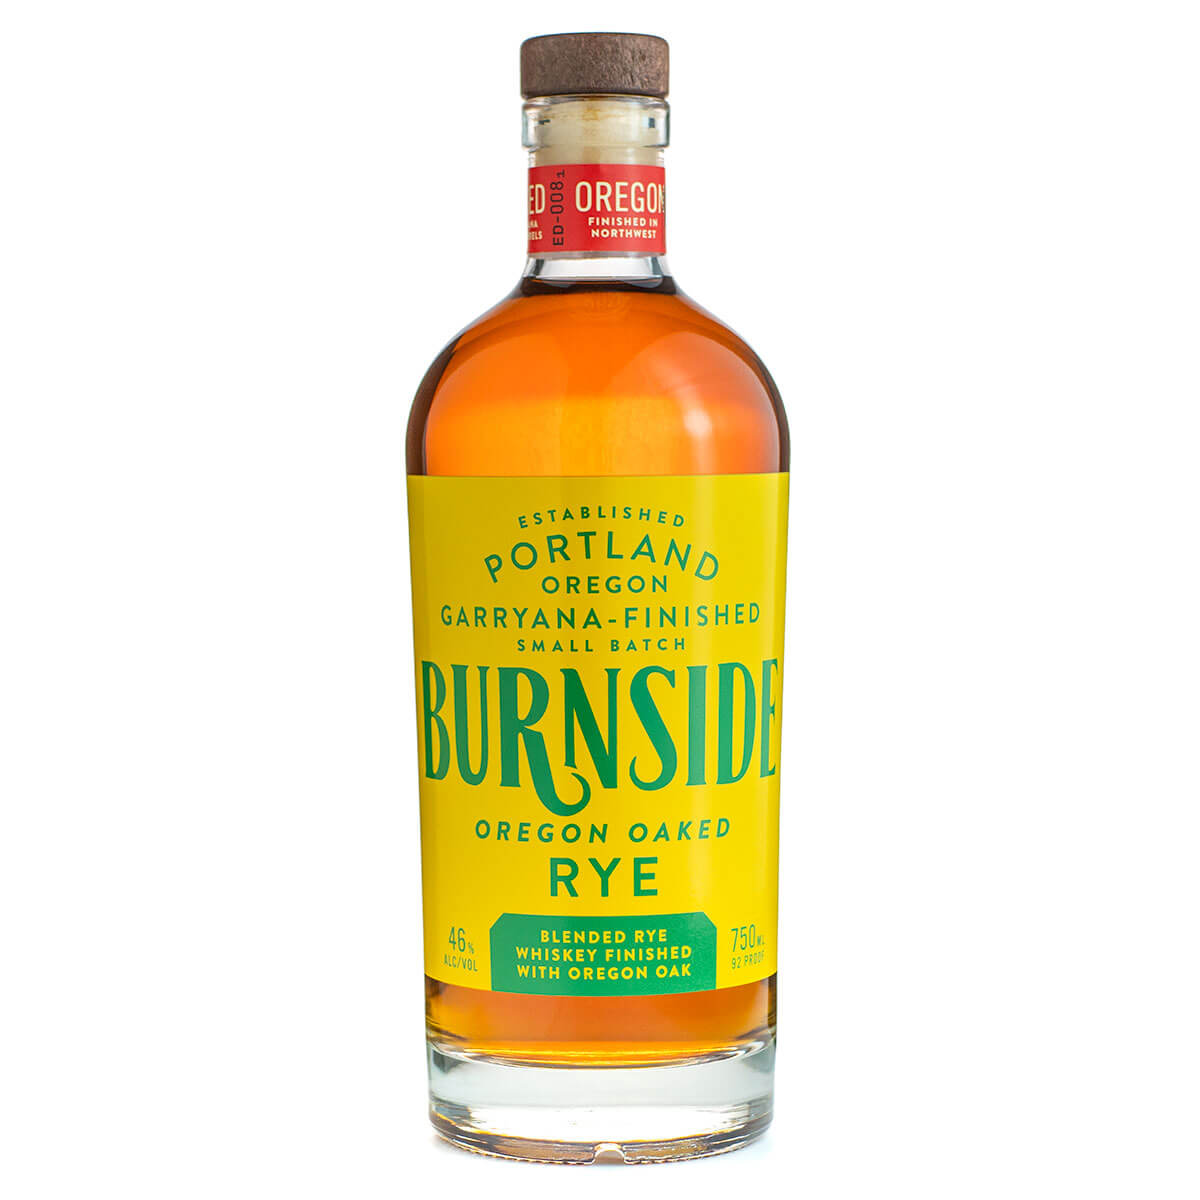 Burnside Oregon Oaked Rye bottle